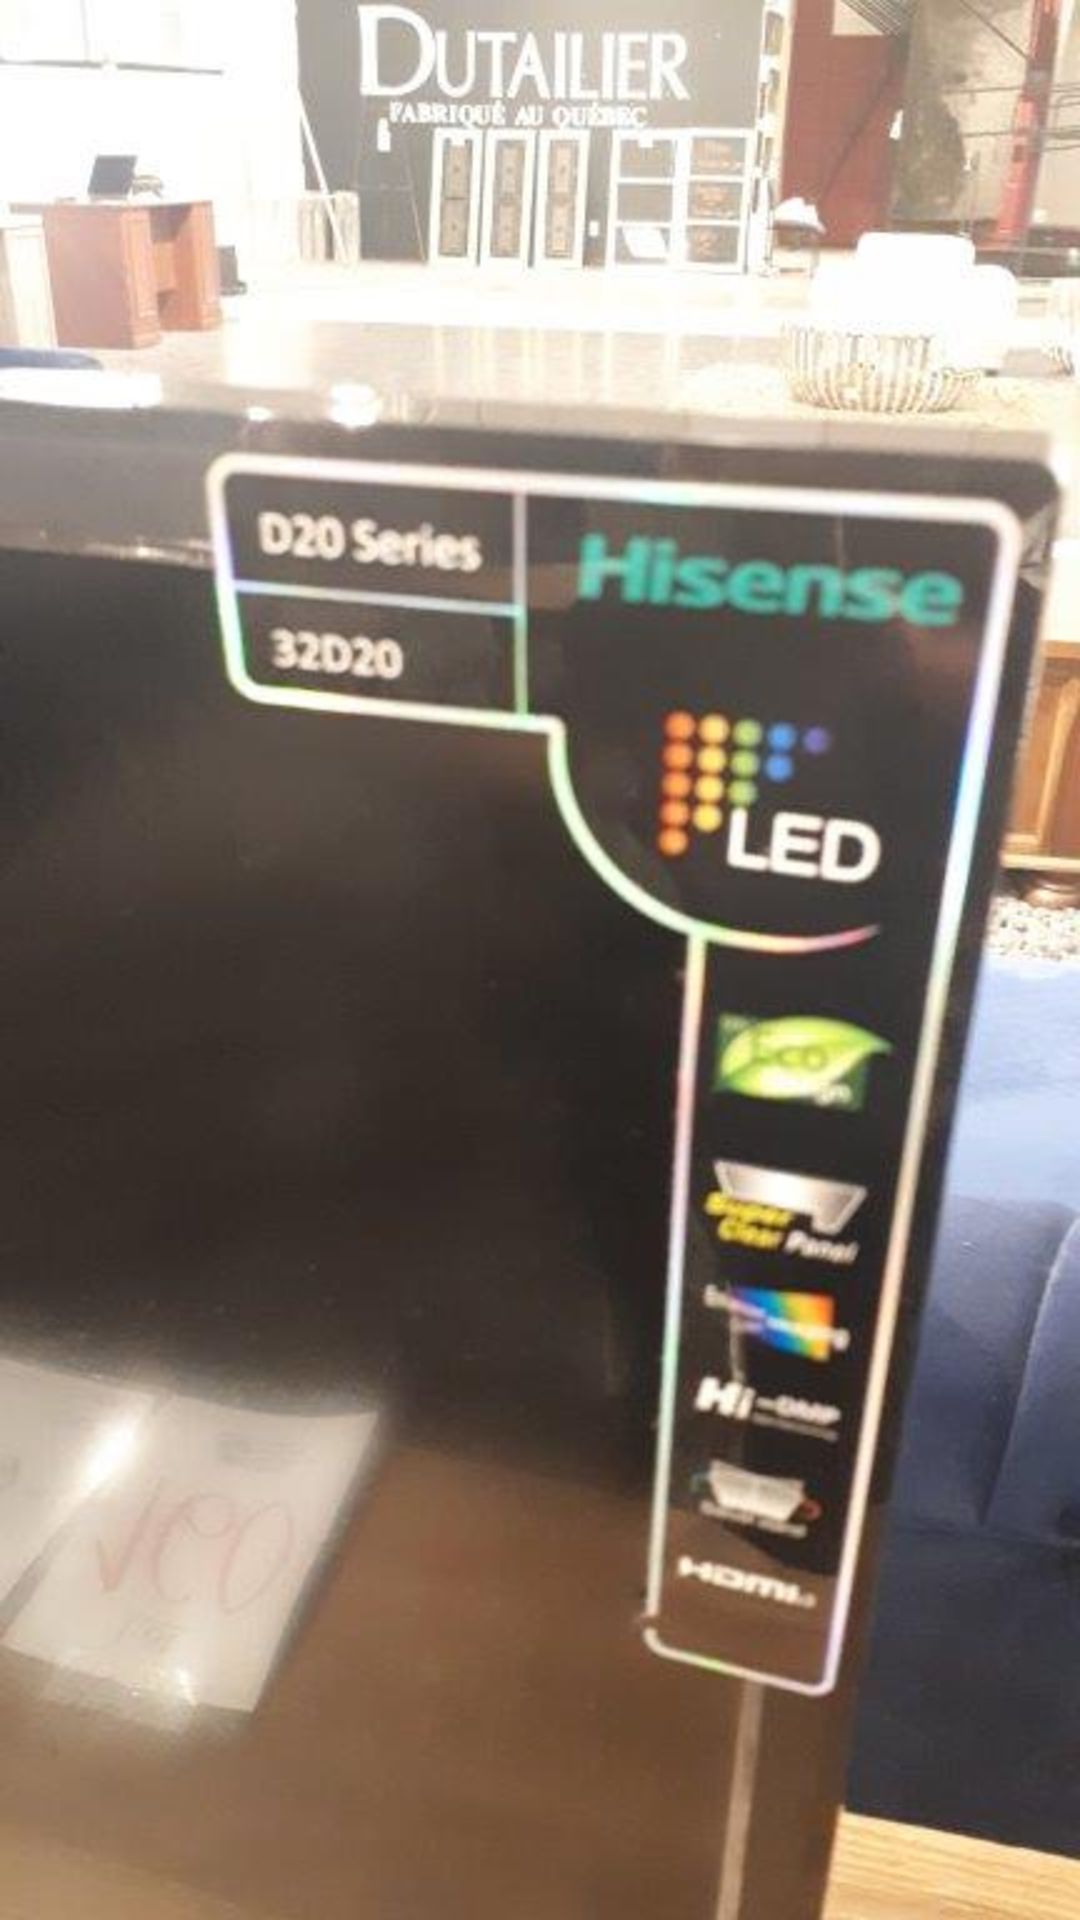 Hisense 32D20 32” LED television - Image 2 of 3